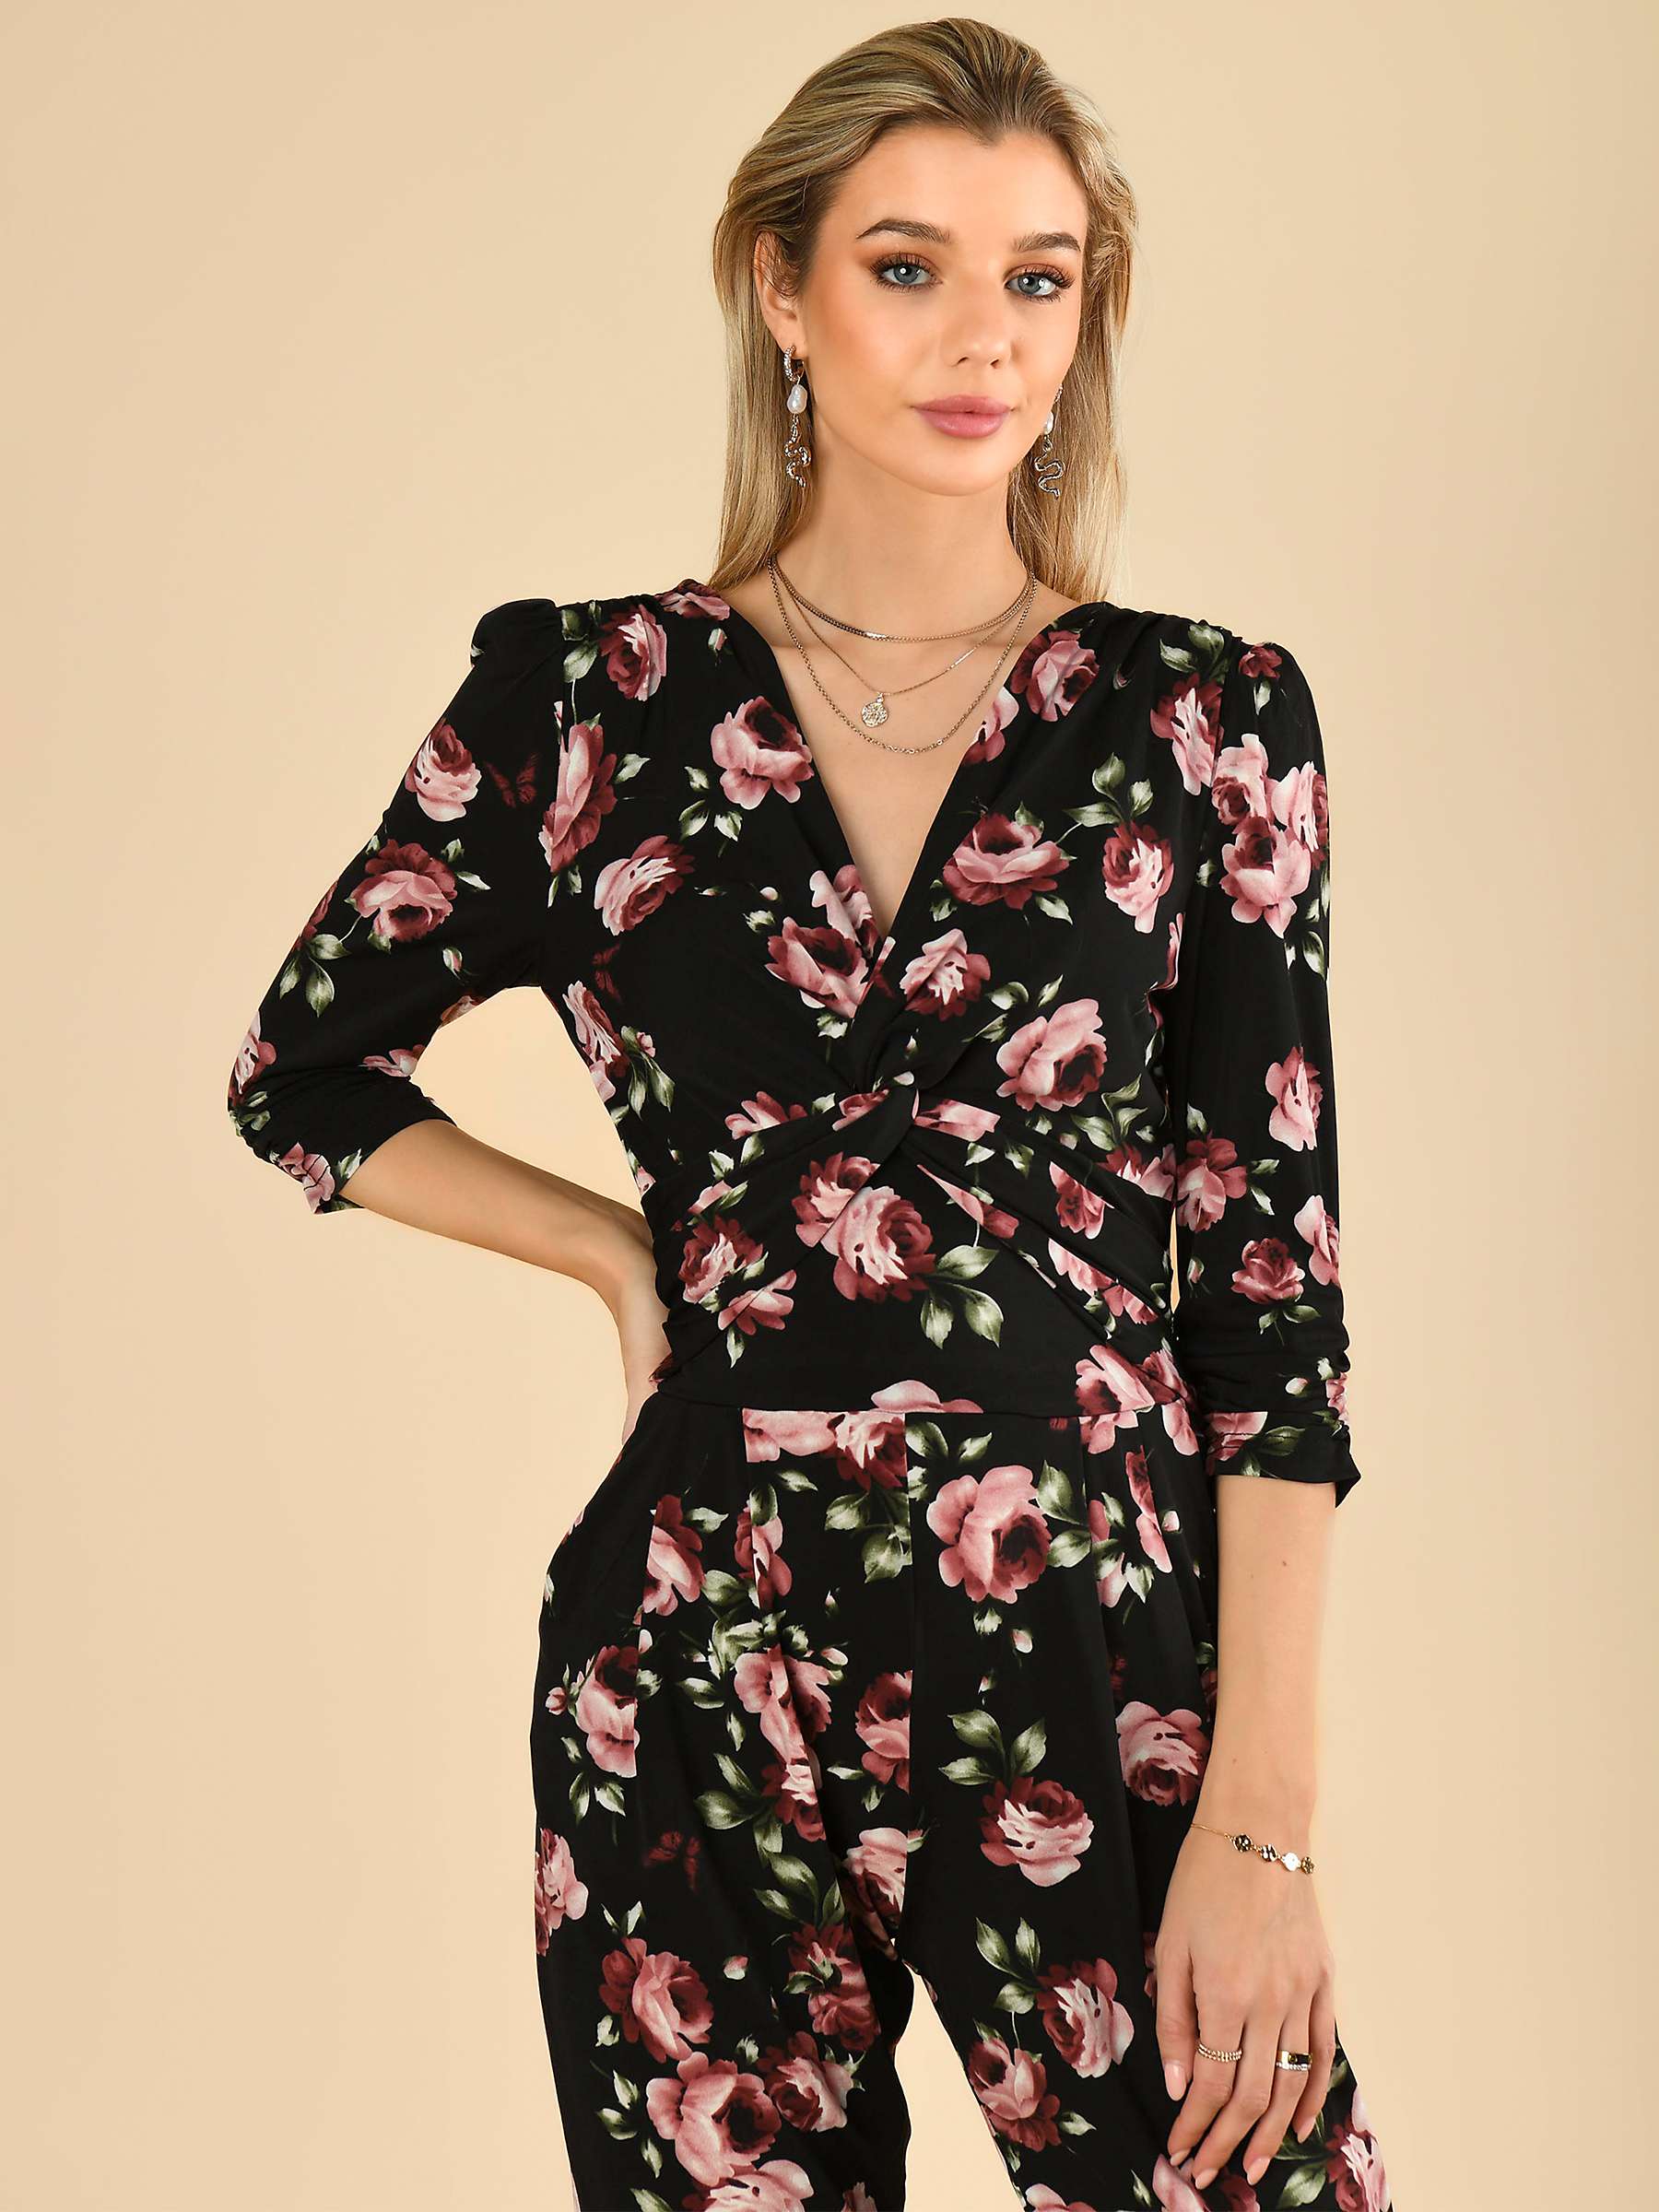 Buy Jolie Moi Cheryl Twist Front Jersey Jumpsuit, Black Floral Online at johnlewis.com